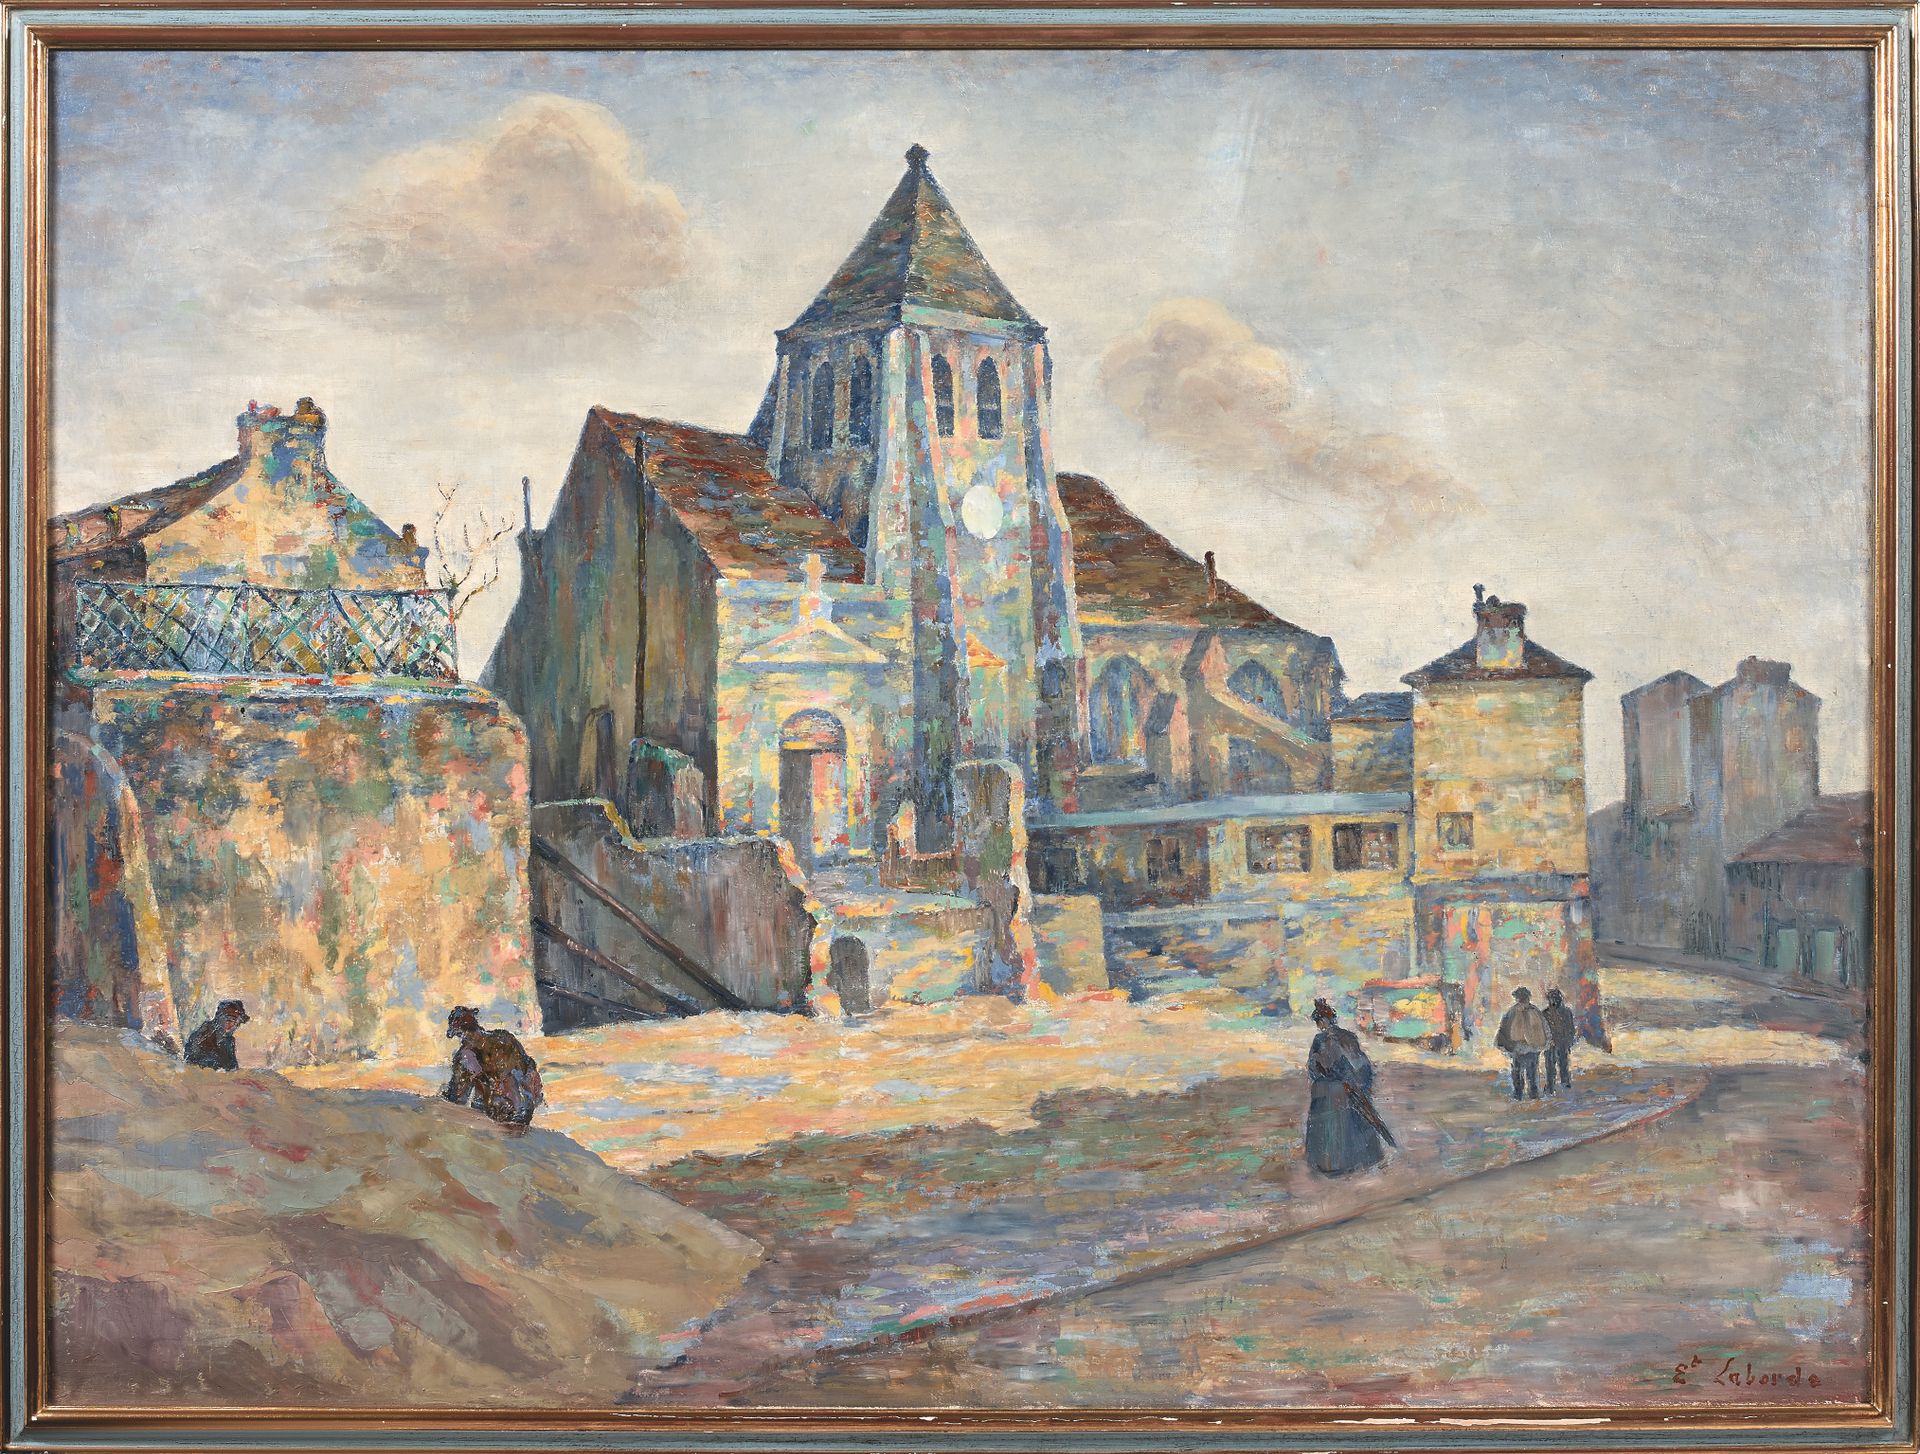 Null 埃内斯特-劳德 (1870 -?)

巴黎，圣日耳曼-德-夏洛内教堂

1935年以前。

布面油画，右下方有签名。

95 x 127厘米。